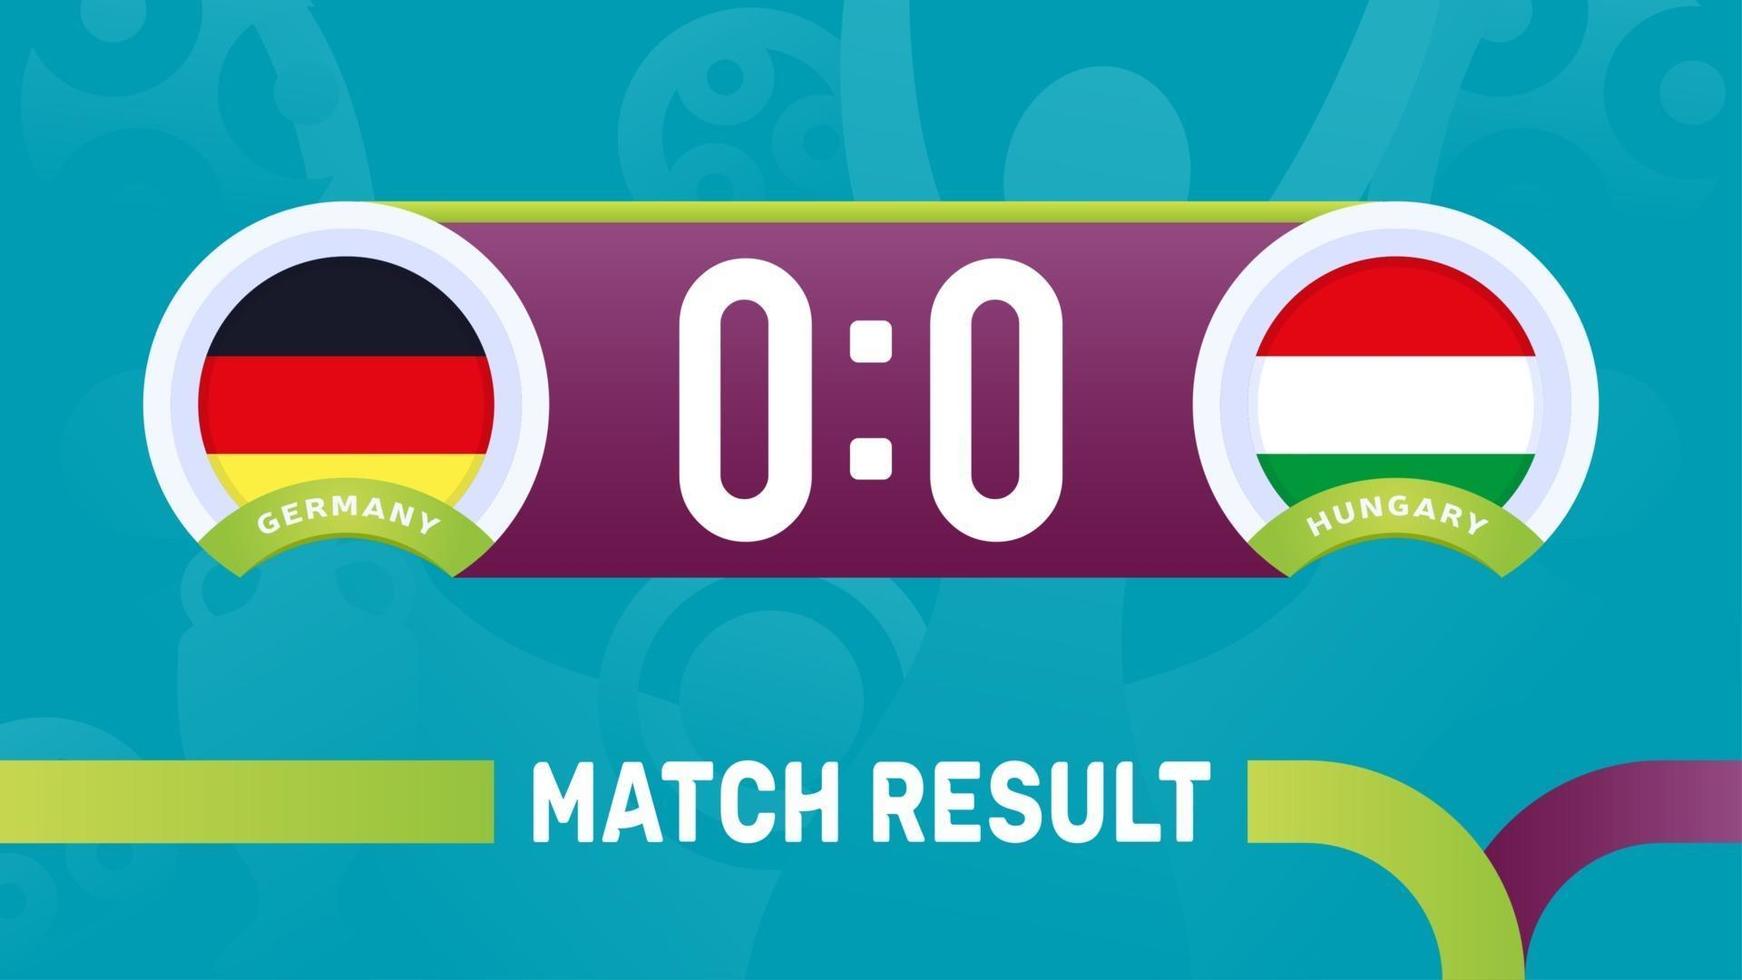 germany vs hungary match result, European Football Championship 2020 vector illustration